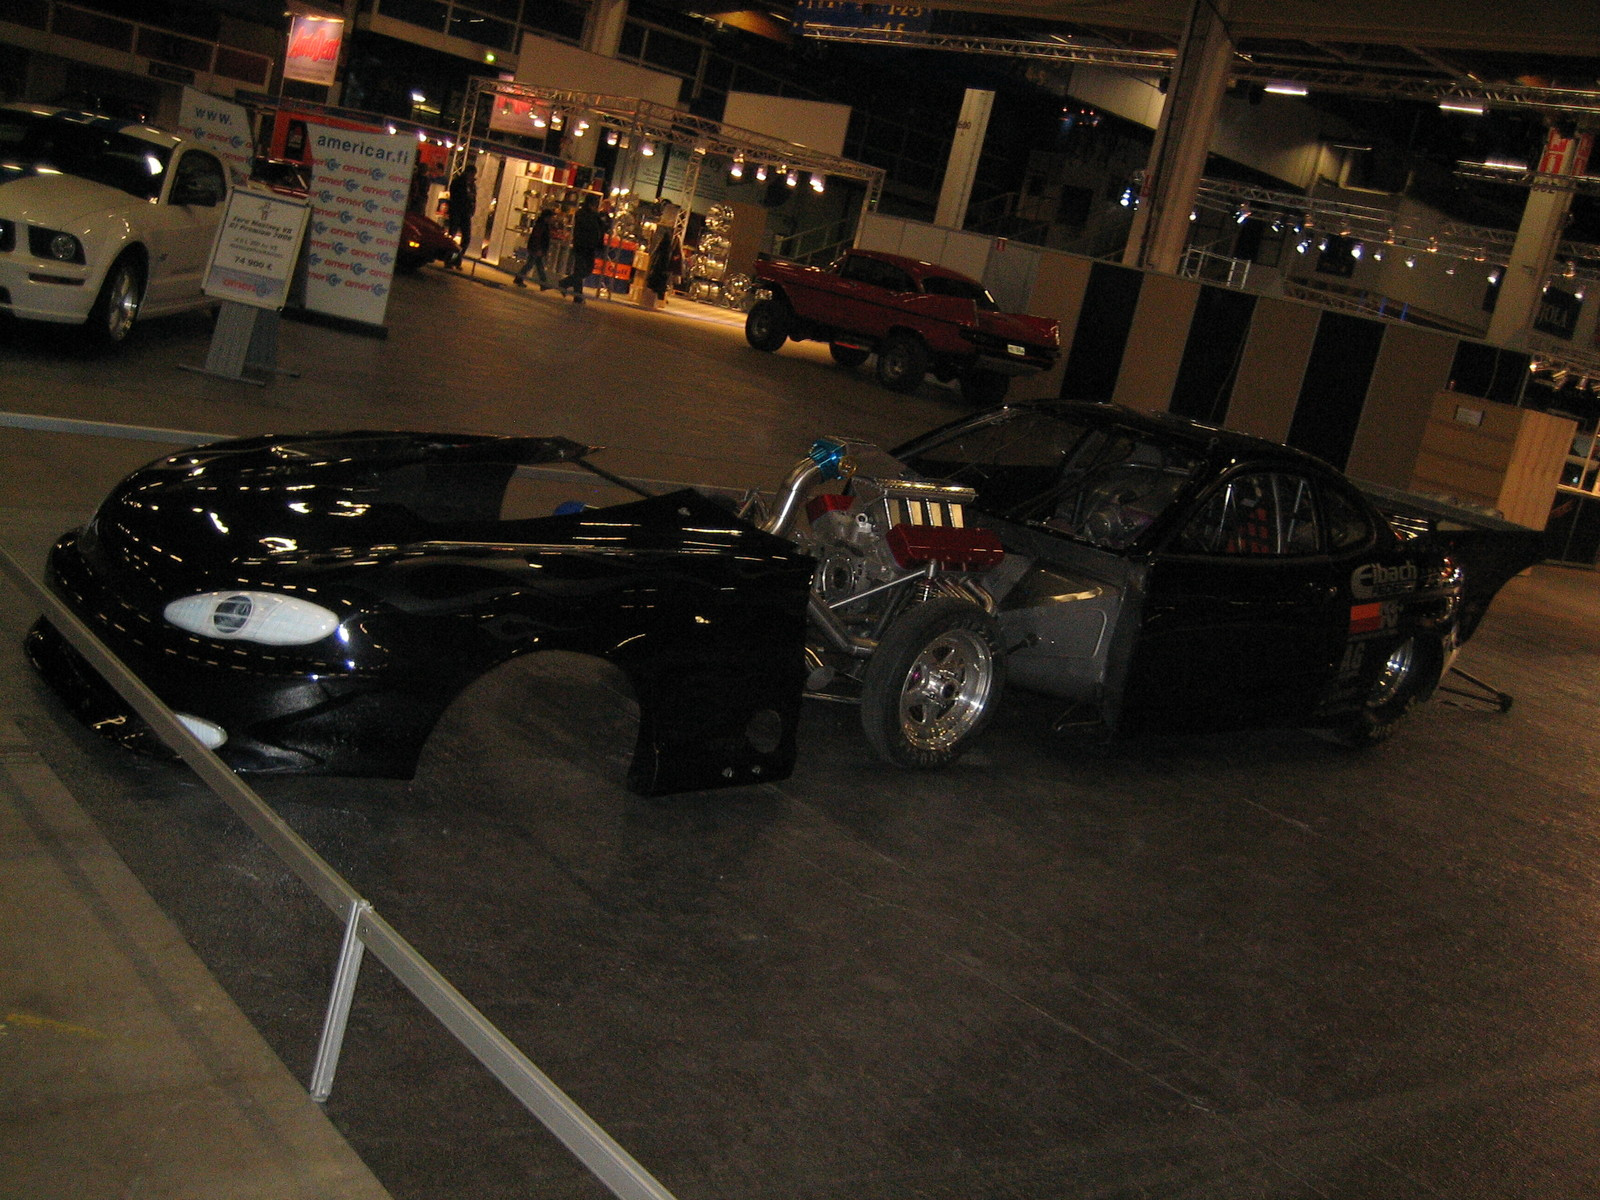 American car show 2008